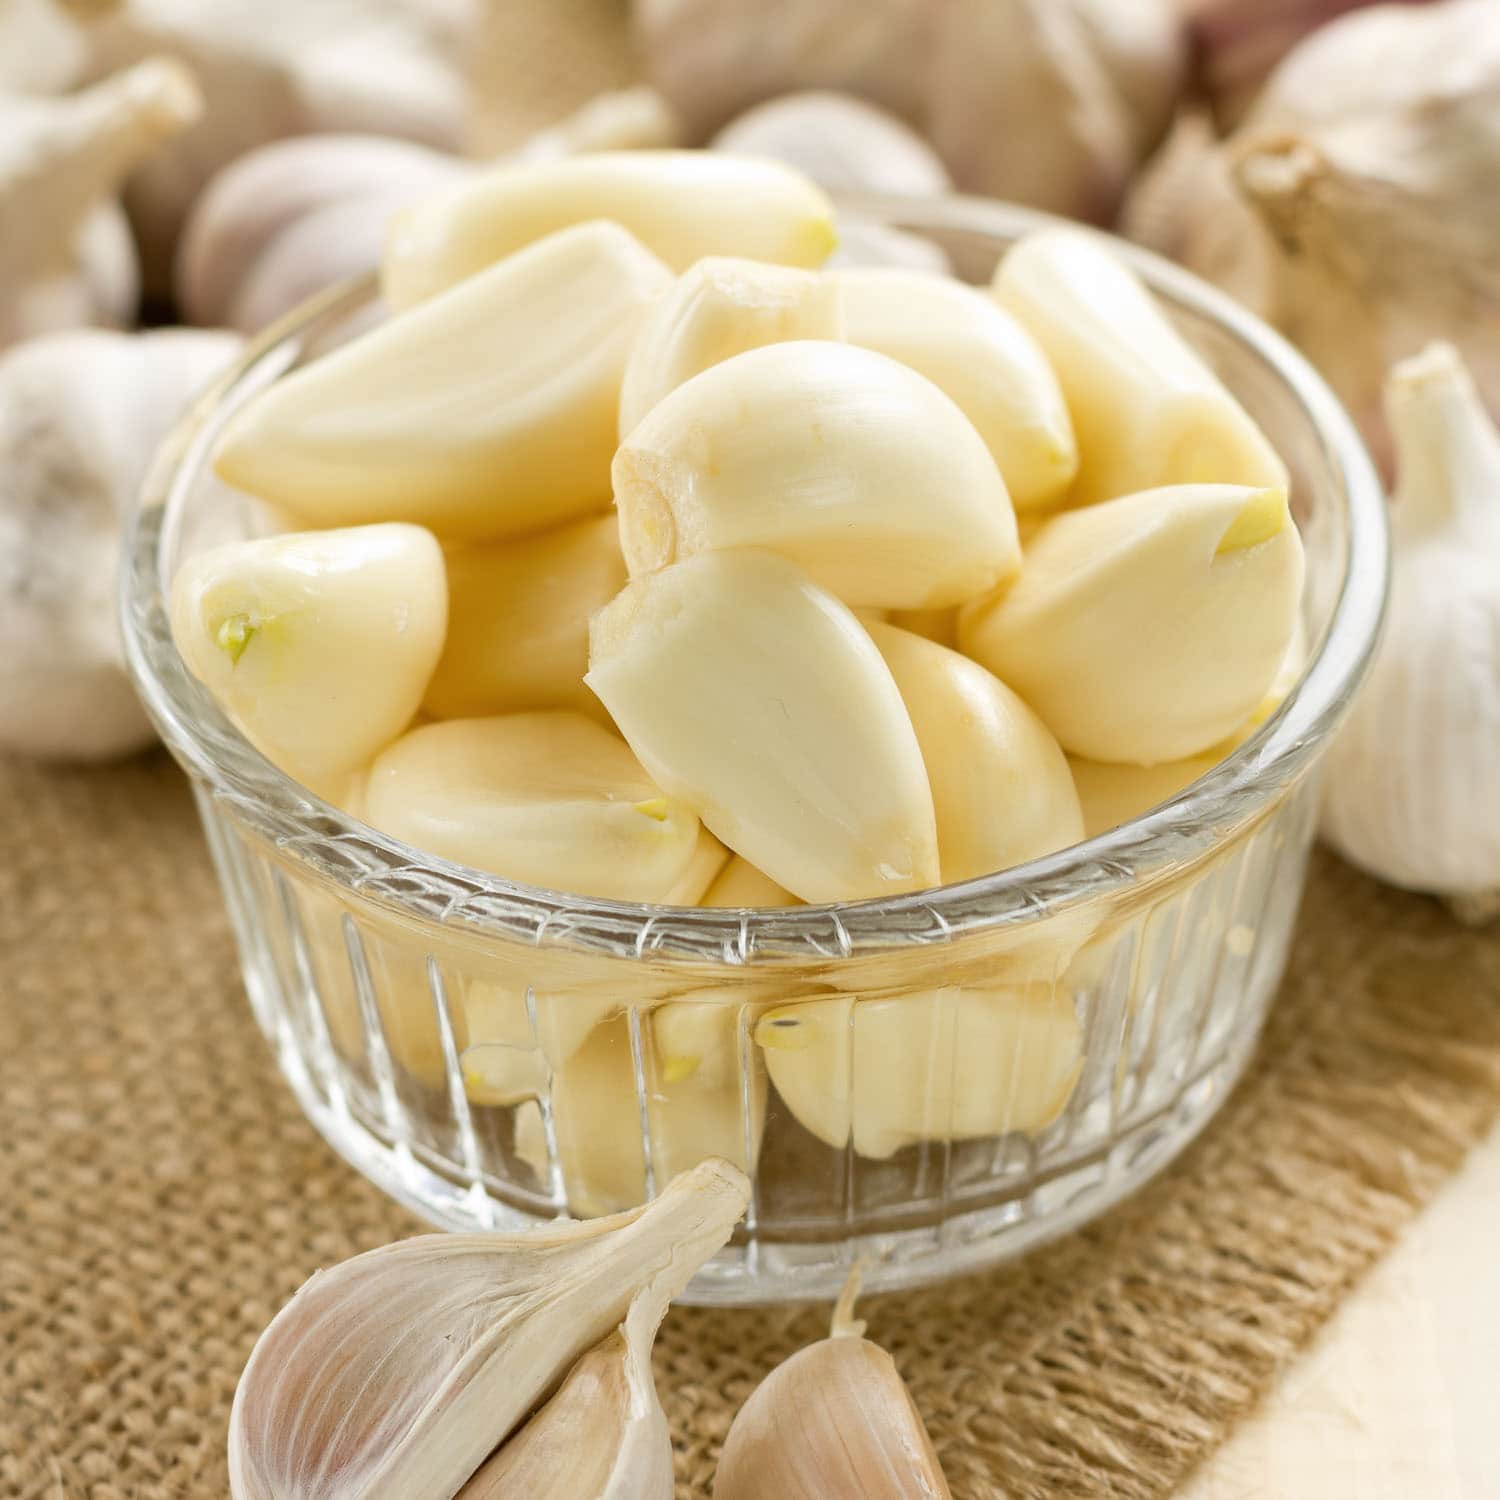 How To Store Garlic Long Term